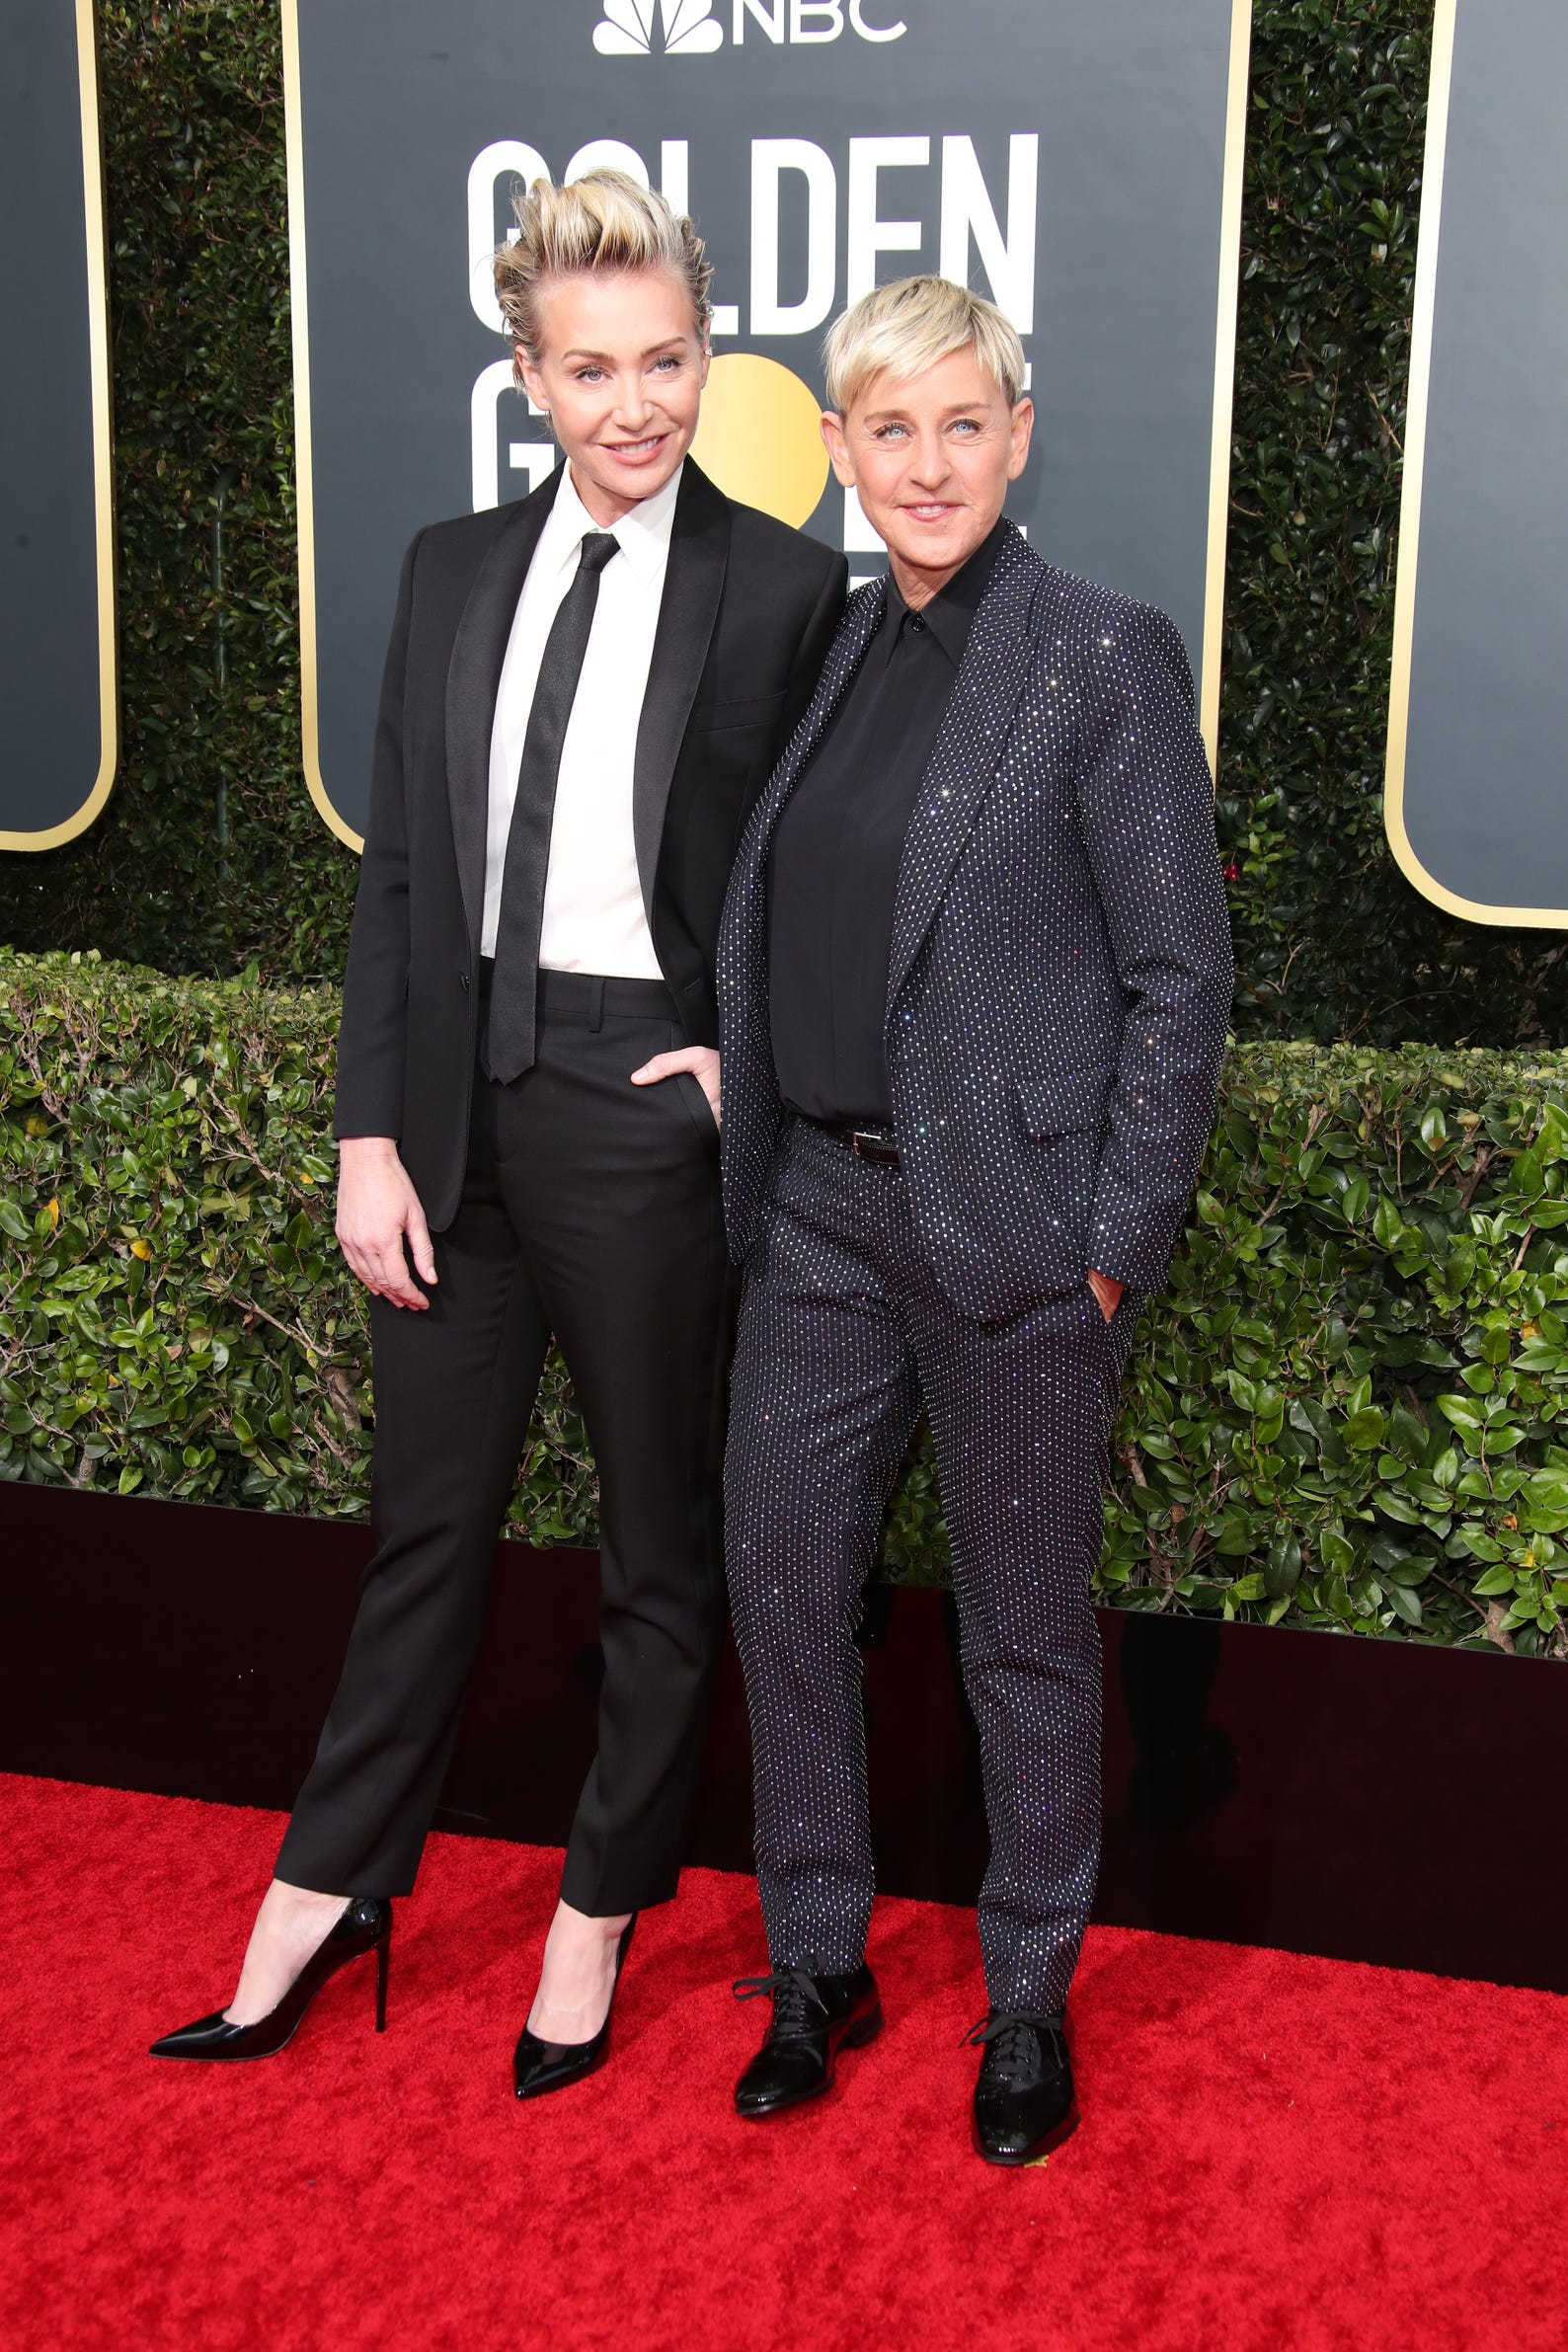 Portia de Rossi, left, and Ellen DeGeneres